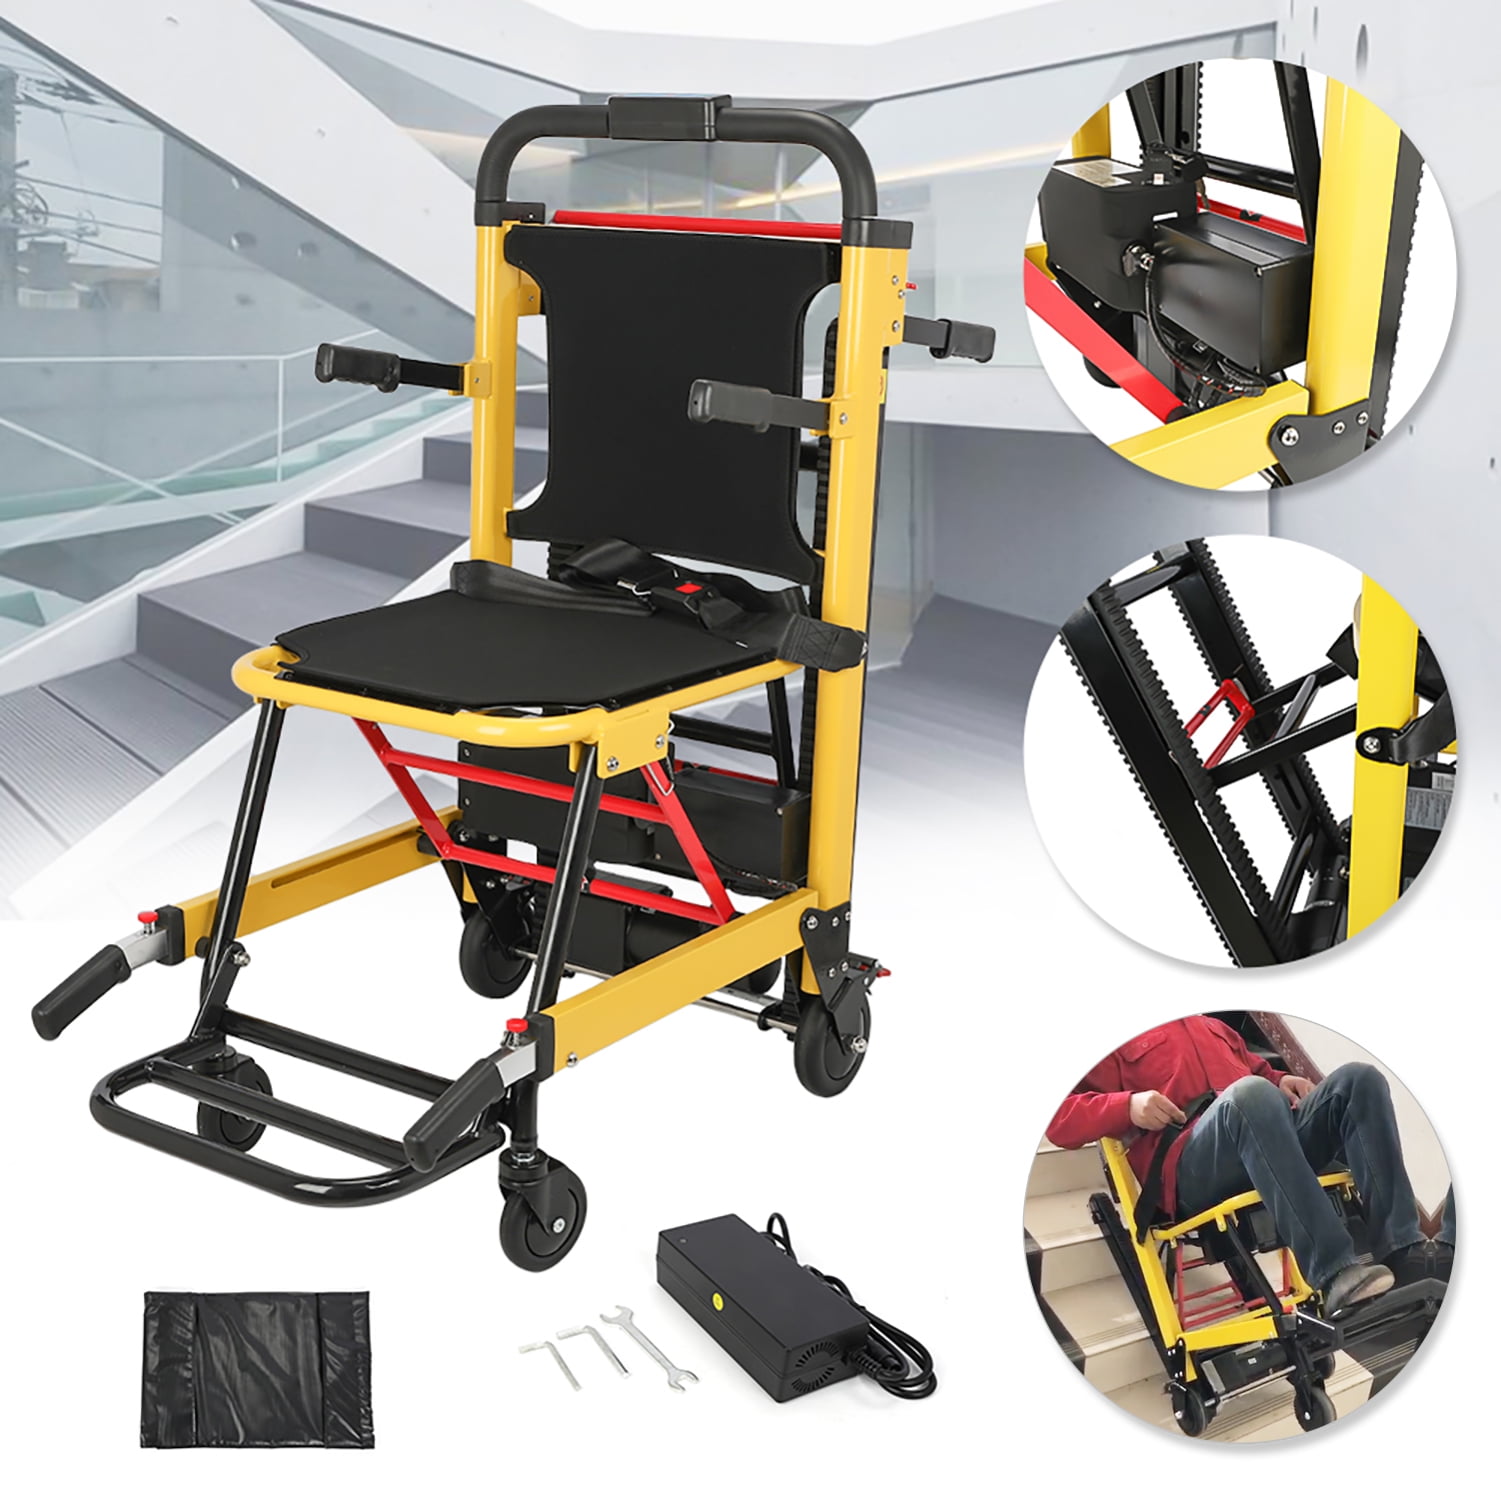 DIYAREA Portable Electric Chair Track Climbing Wheelchair, Assist